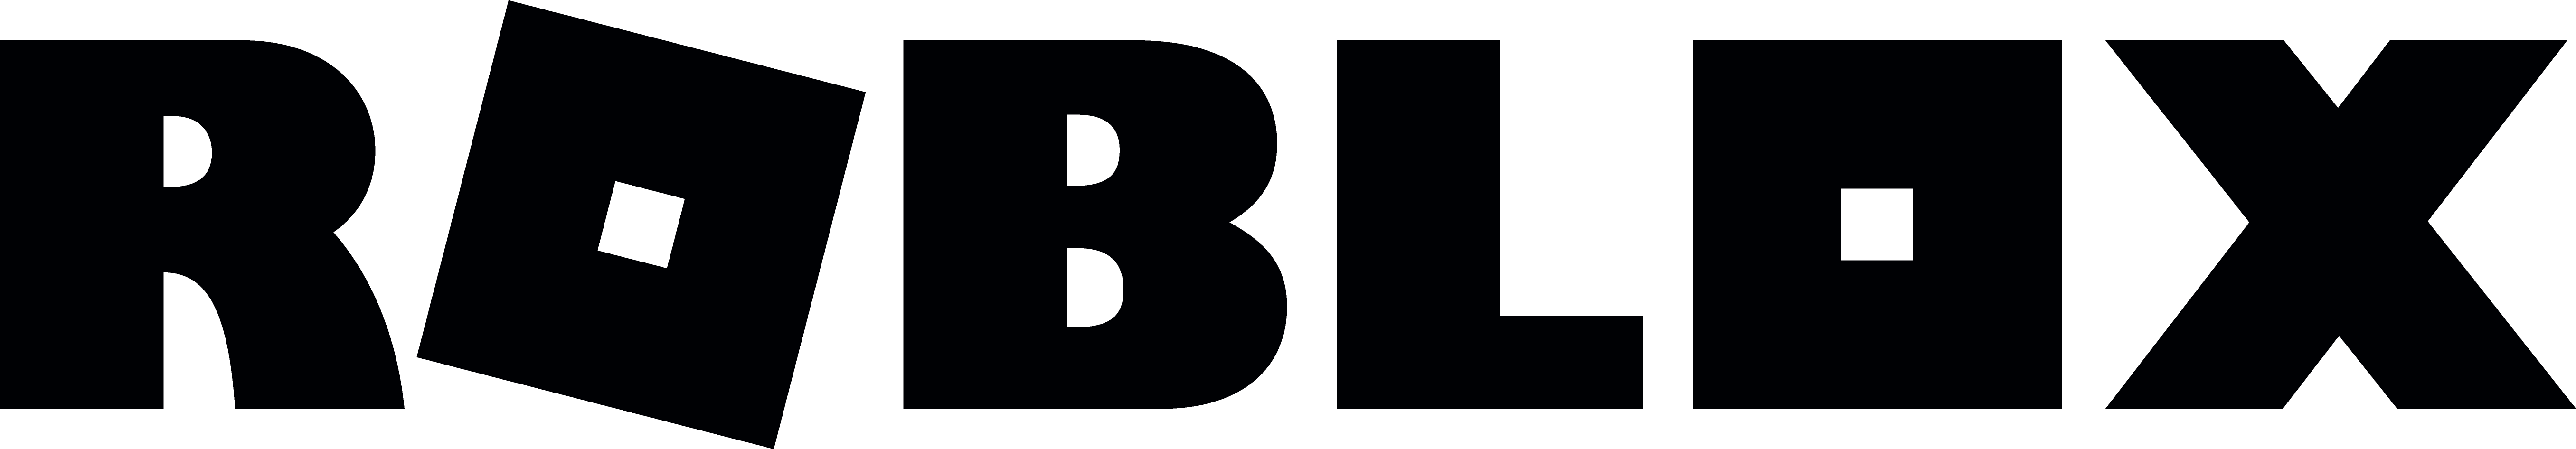 Logo-Roblox-Black-Full.png